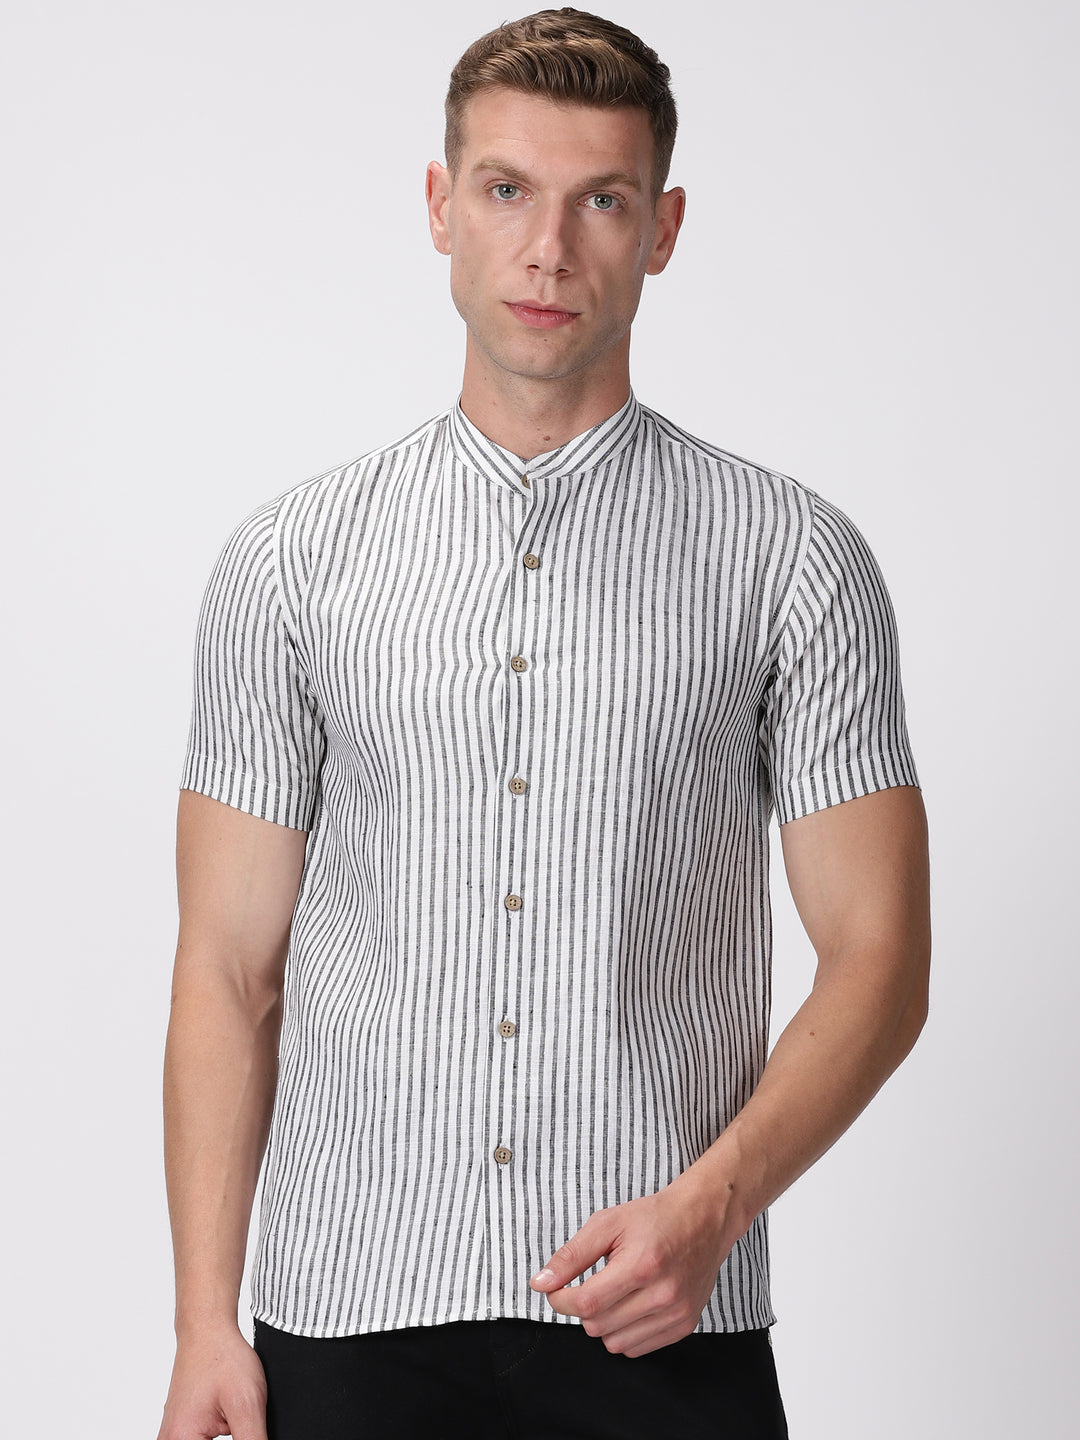 Max - Pure Linen Striped Short Sleeve Shirt - Black & White